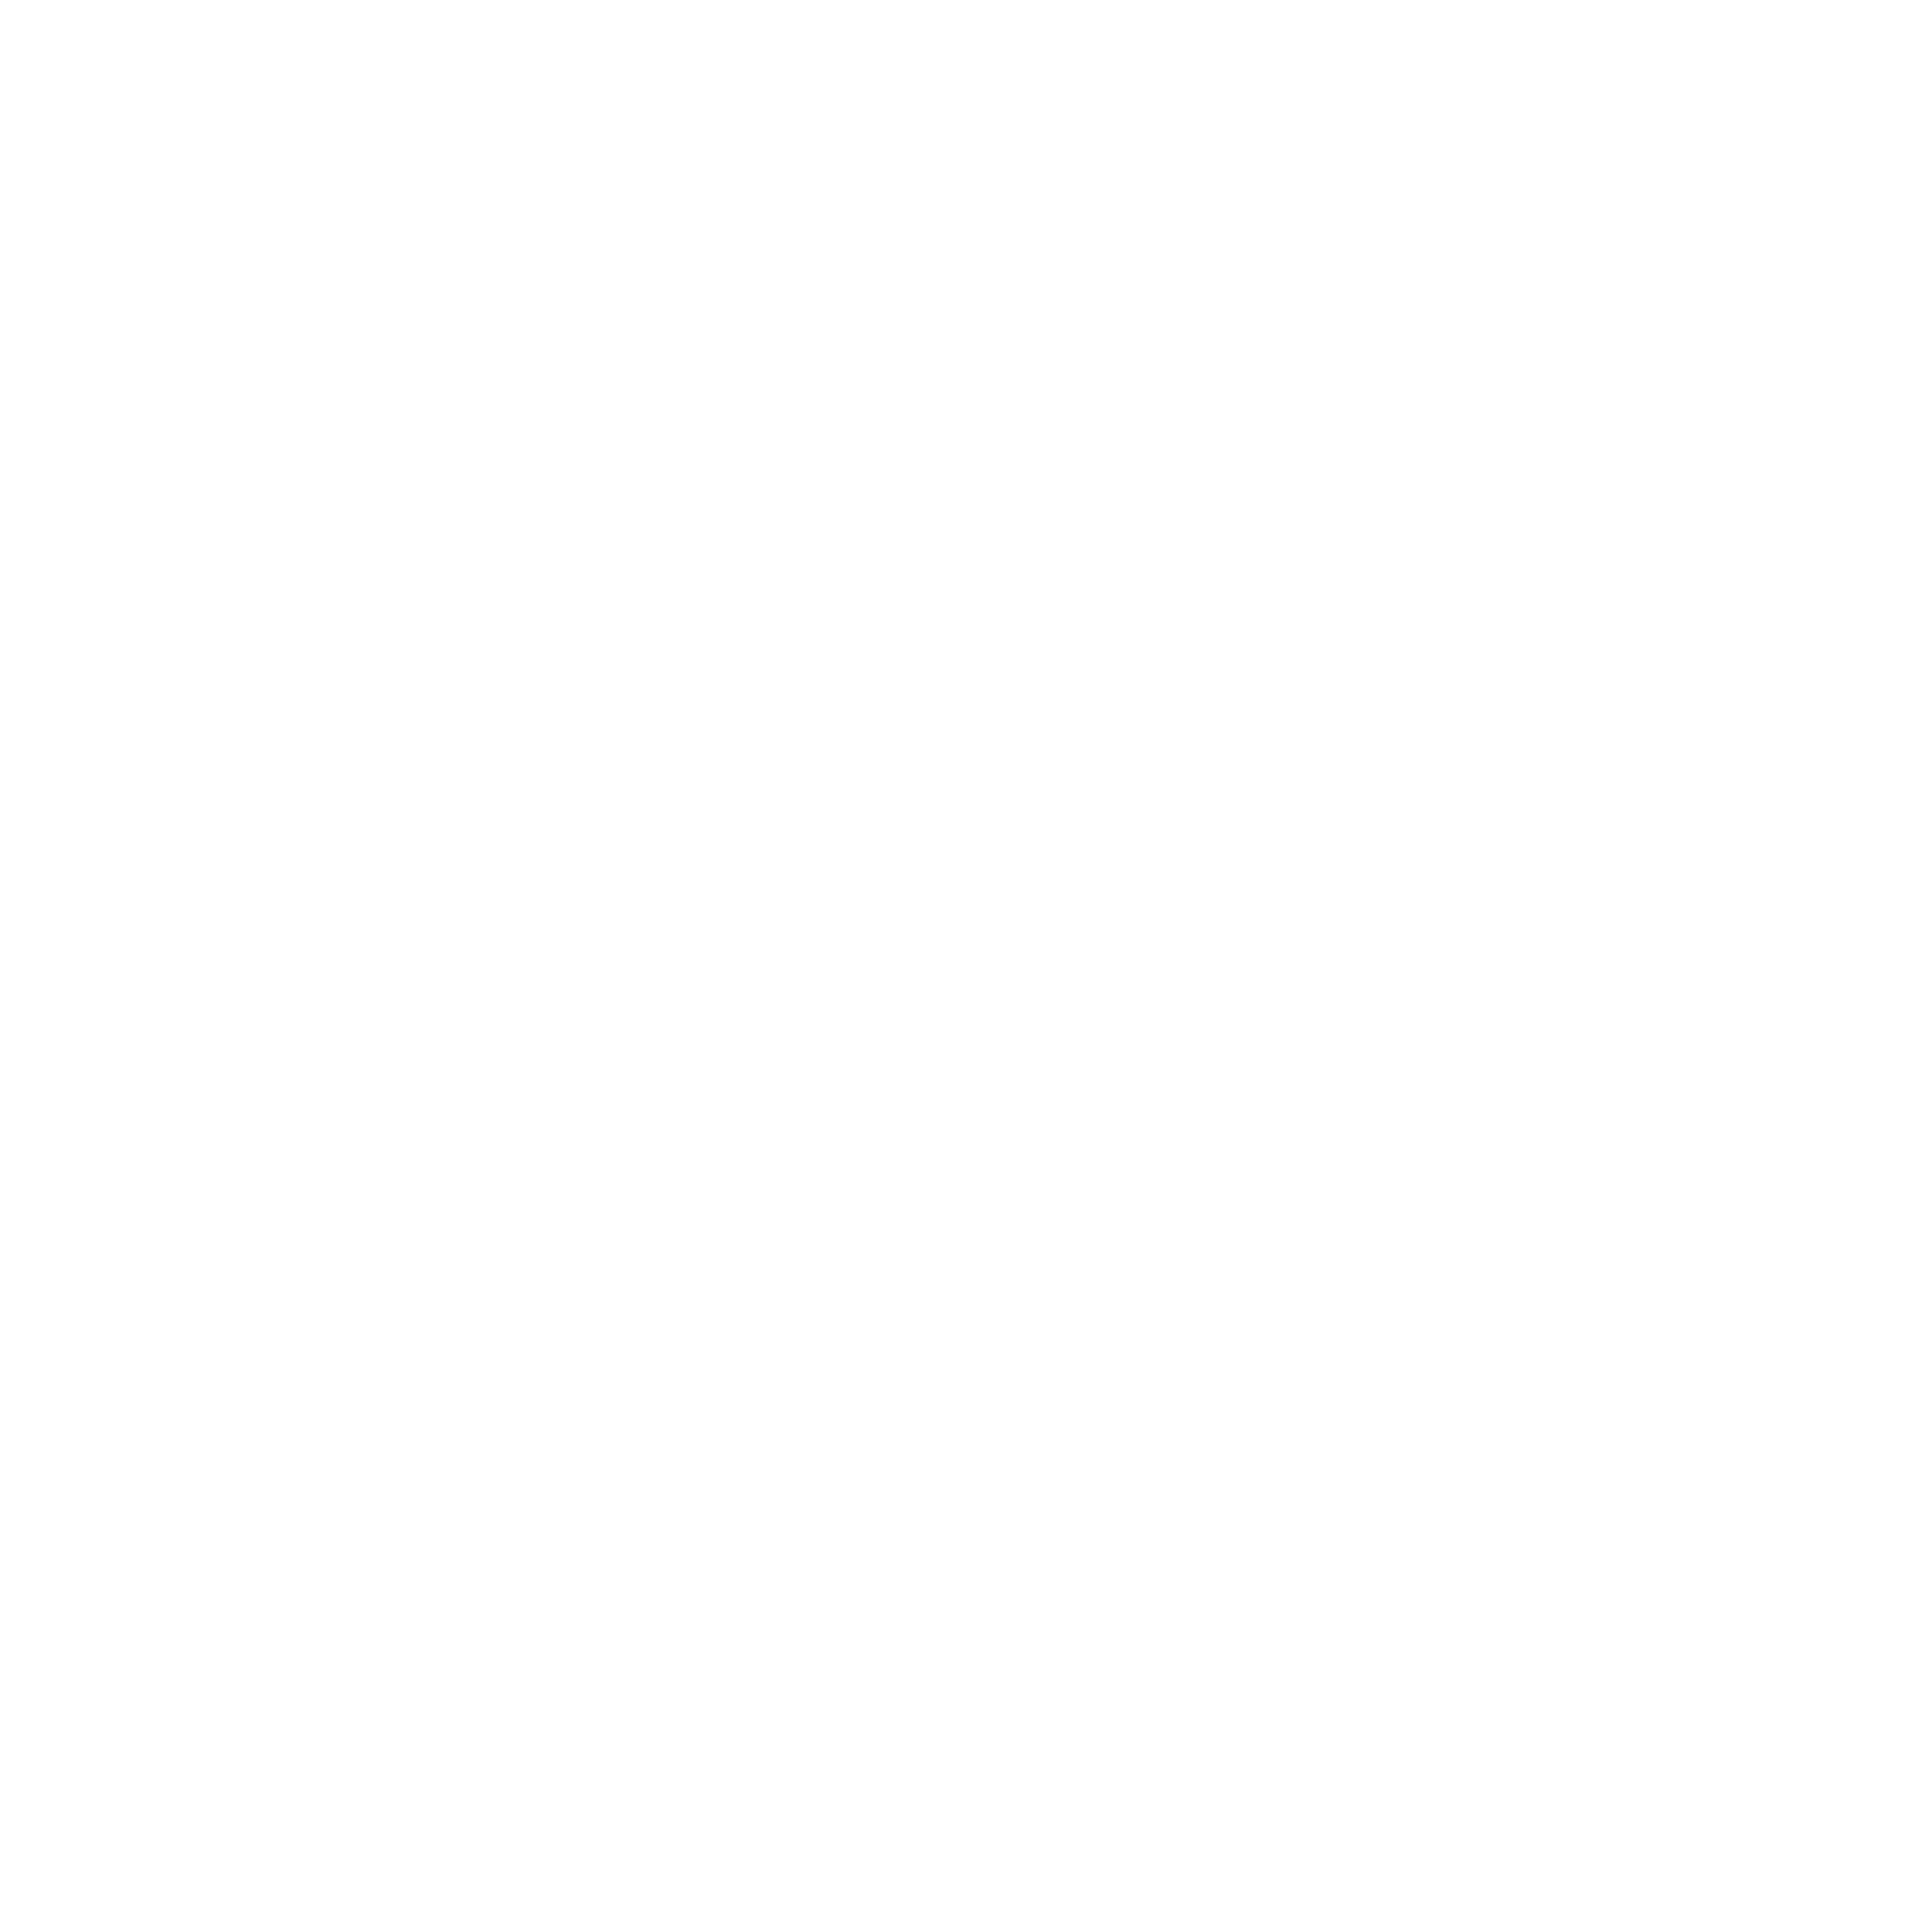 Finnova Logo Transparent Picture